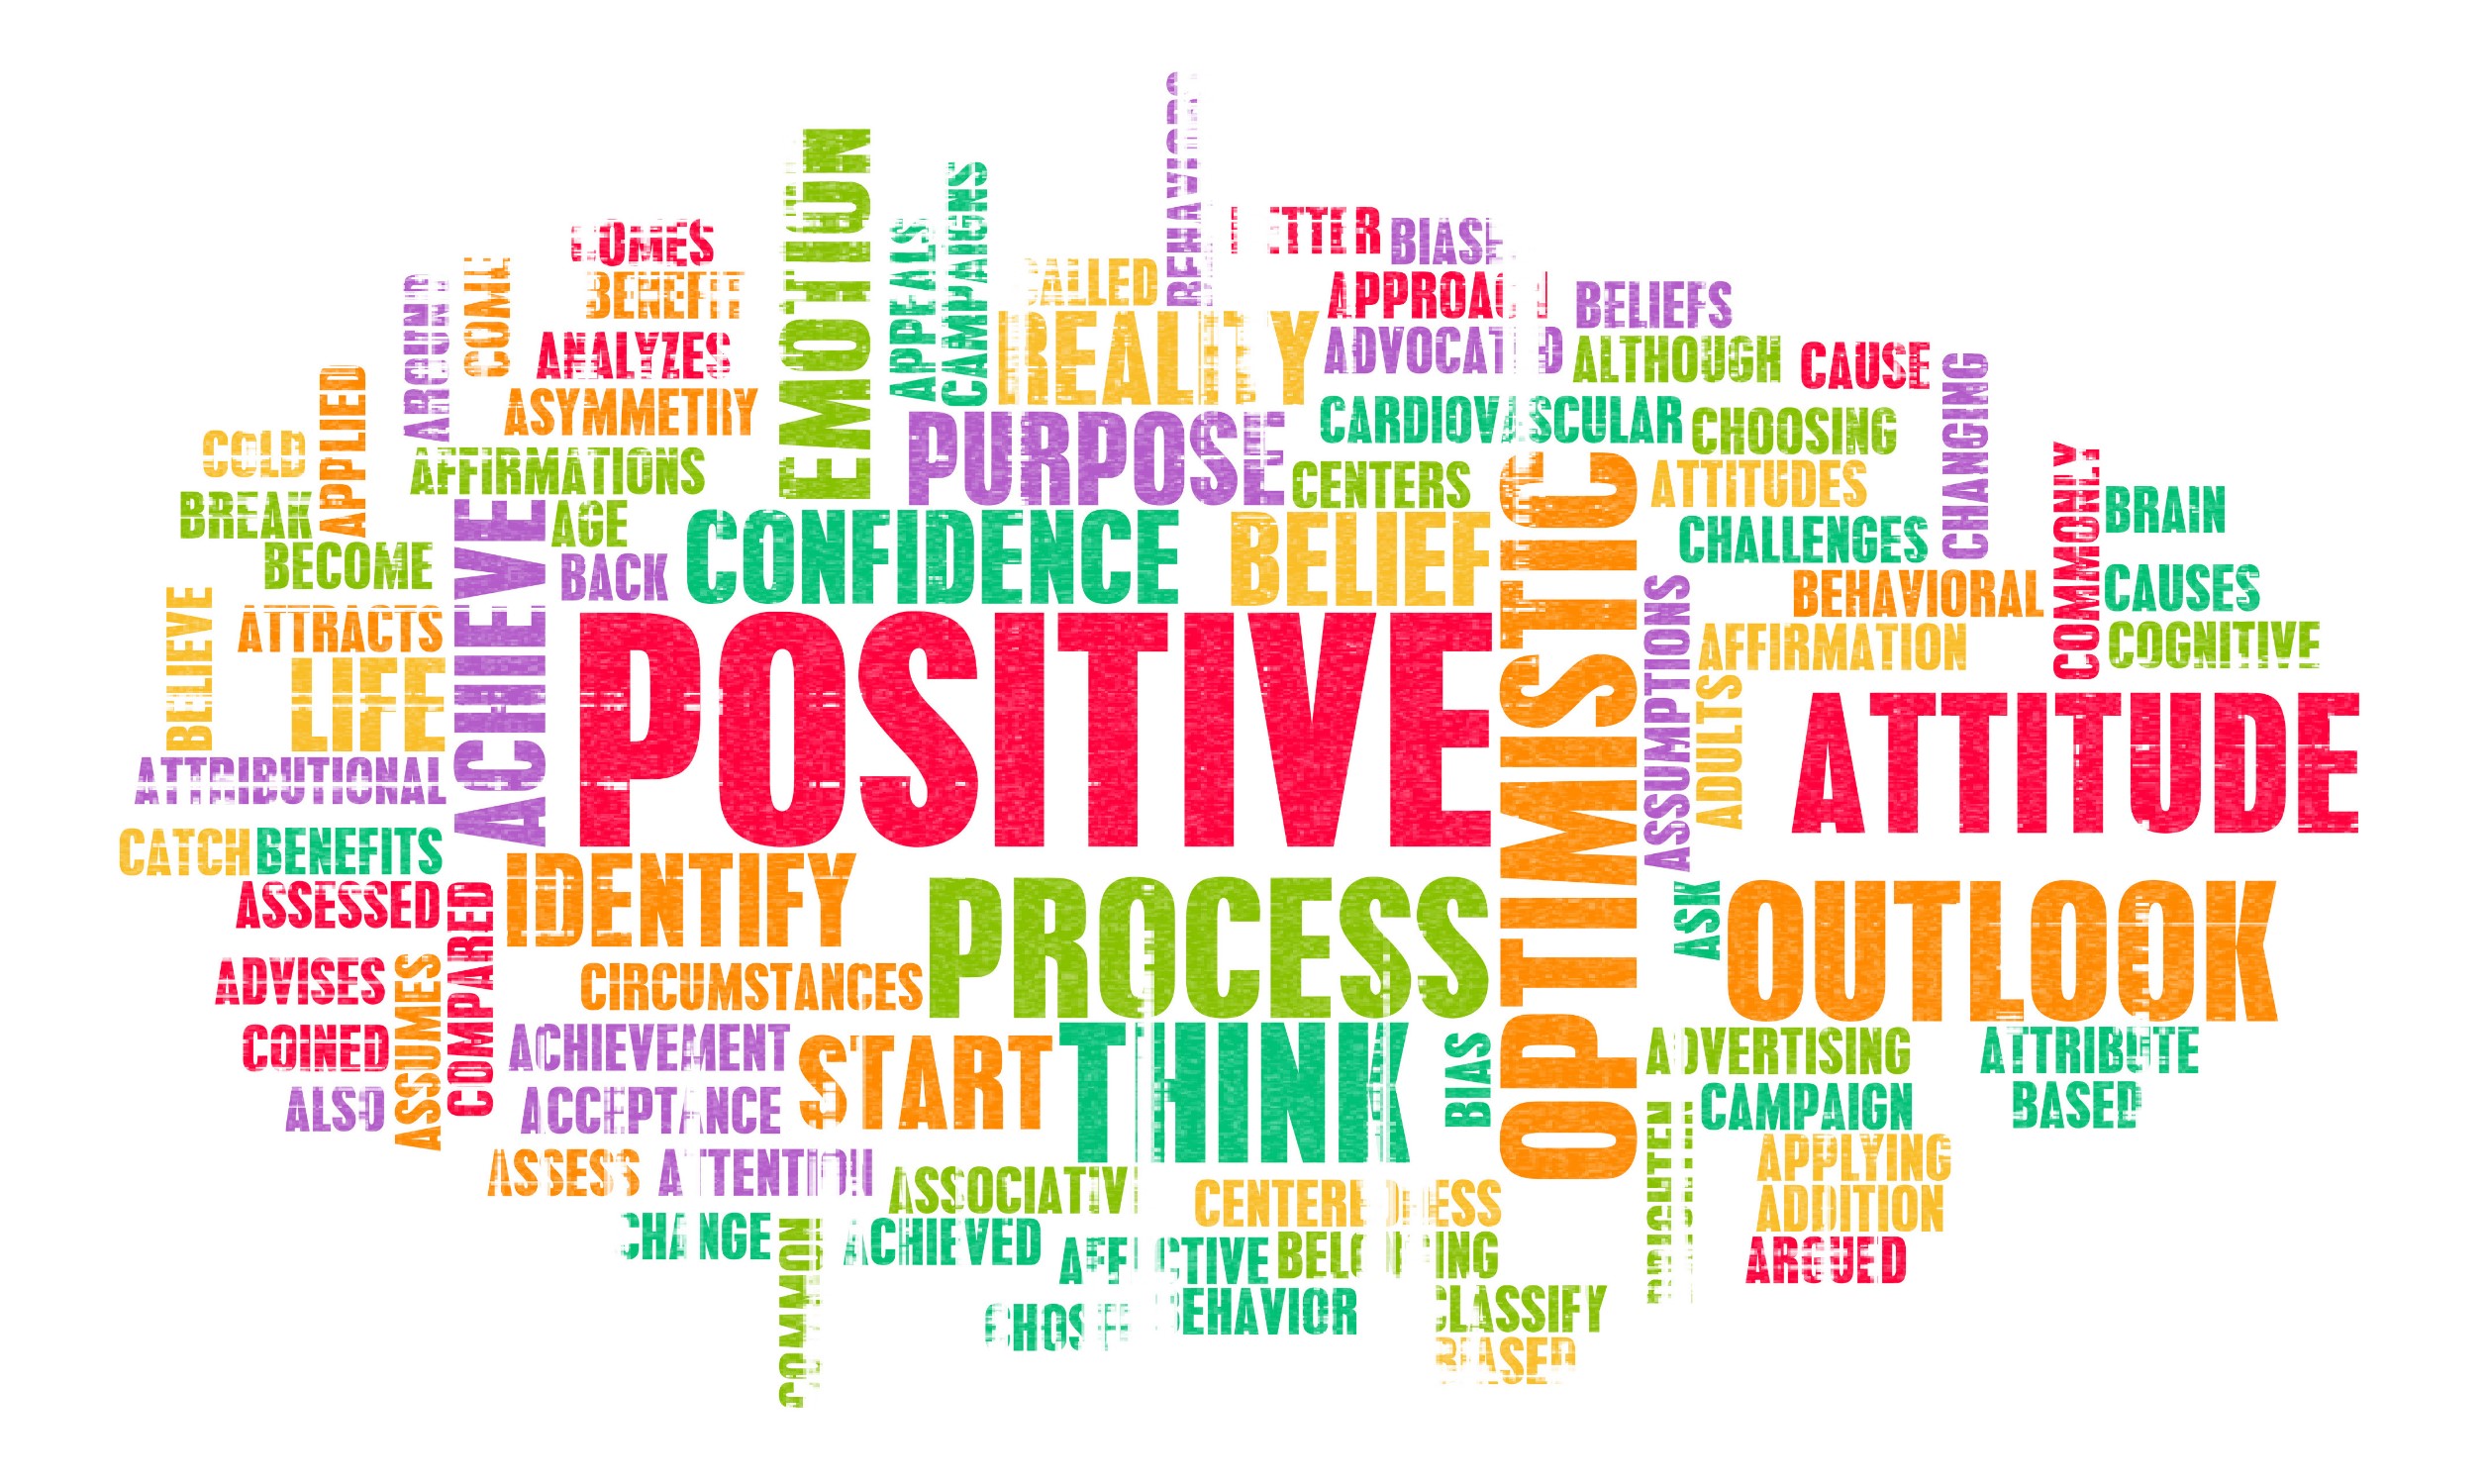 positive words for presentation